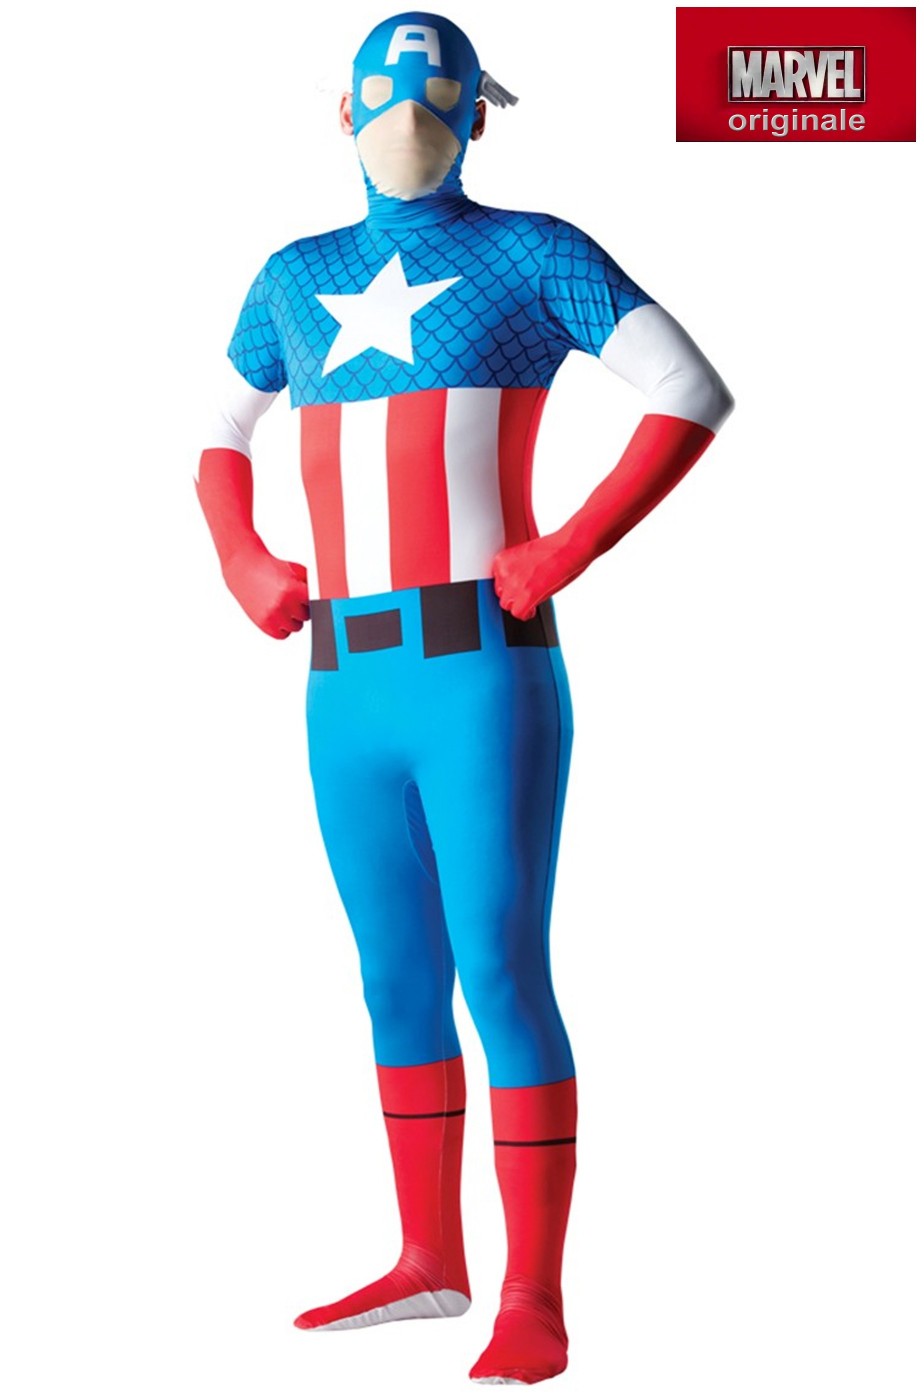 Costume Capitan America 2nd skin. Tuta aderente.Si beve attraverso